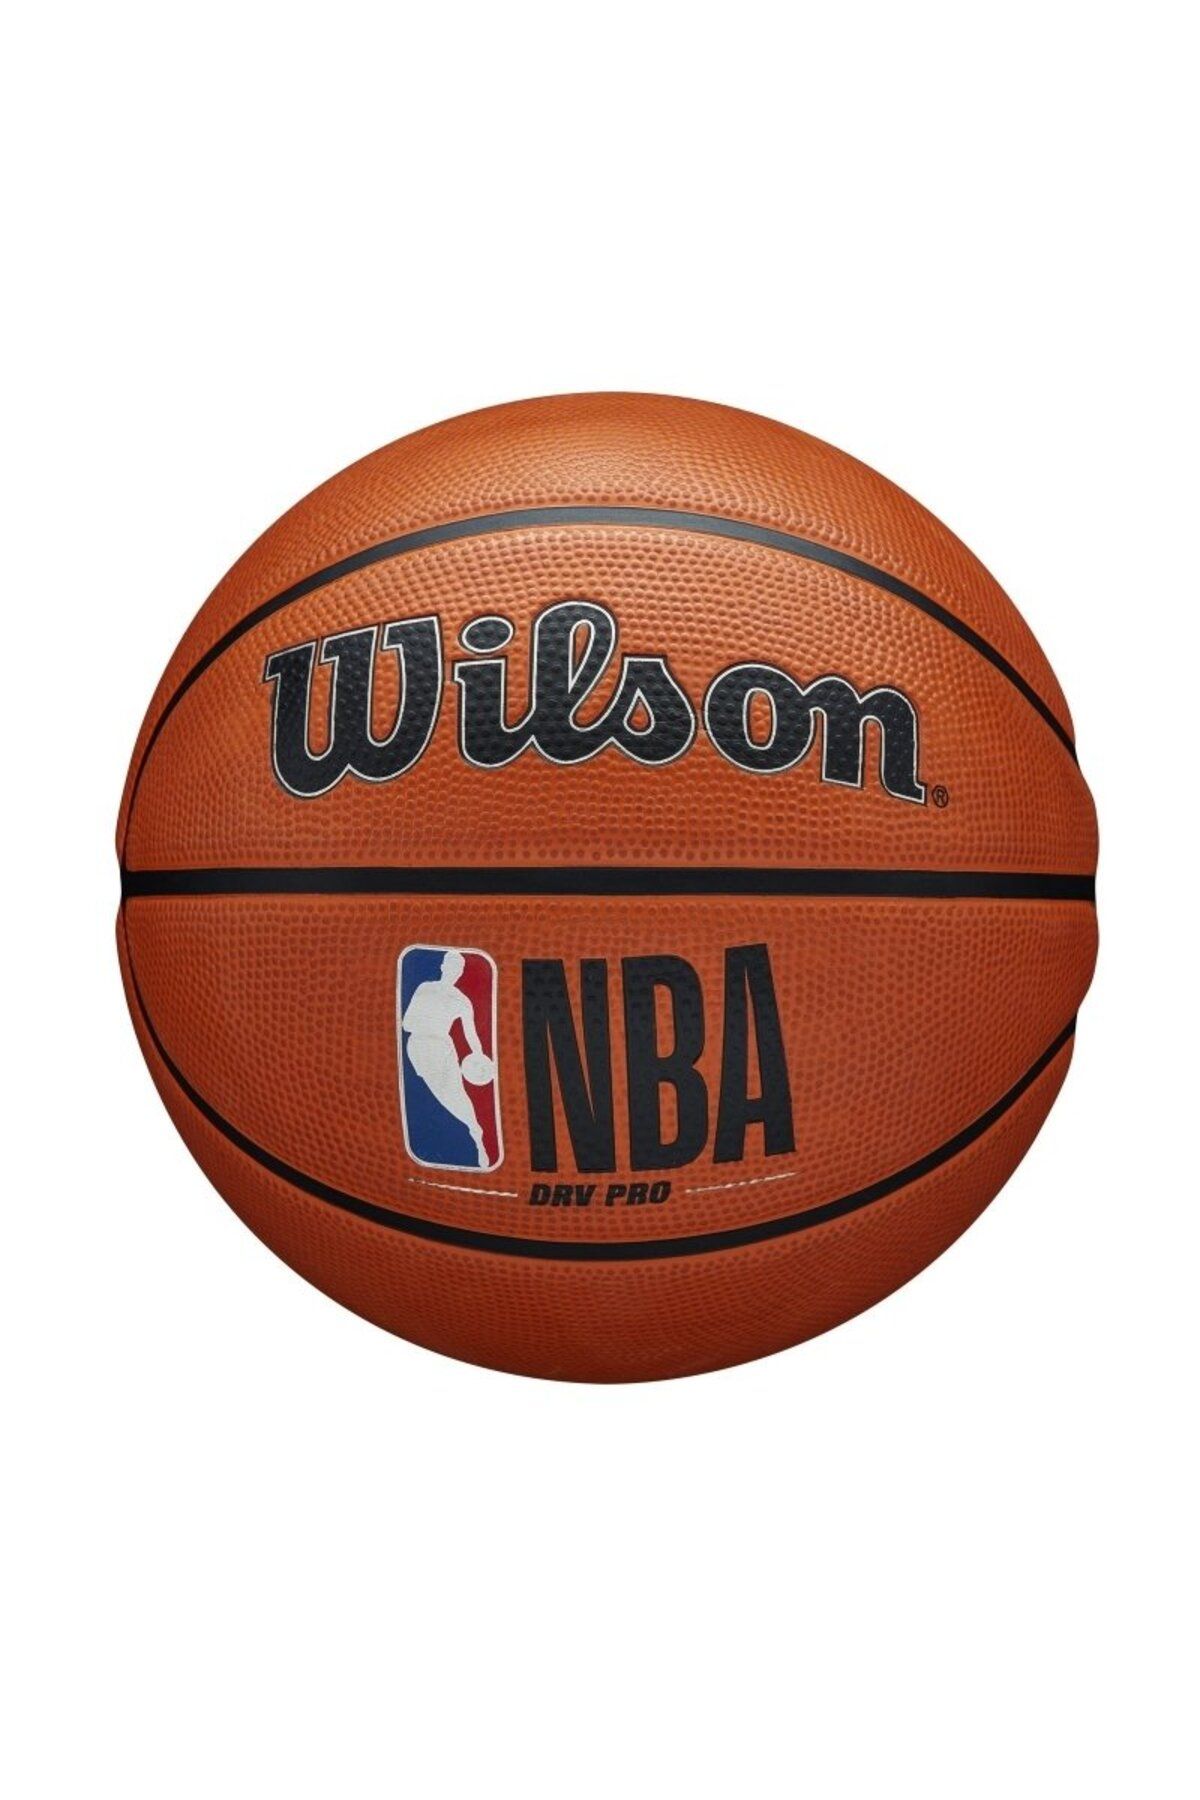 Wilson Nba Drv Pro Basketbol Topu Wtb9100xb07